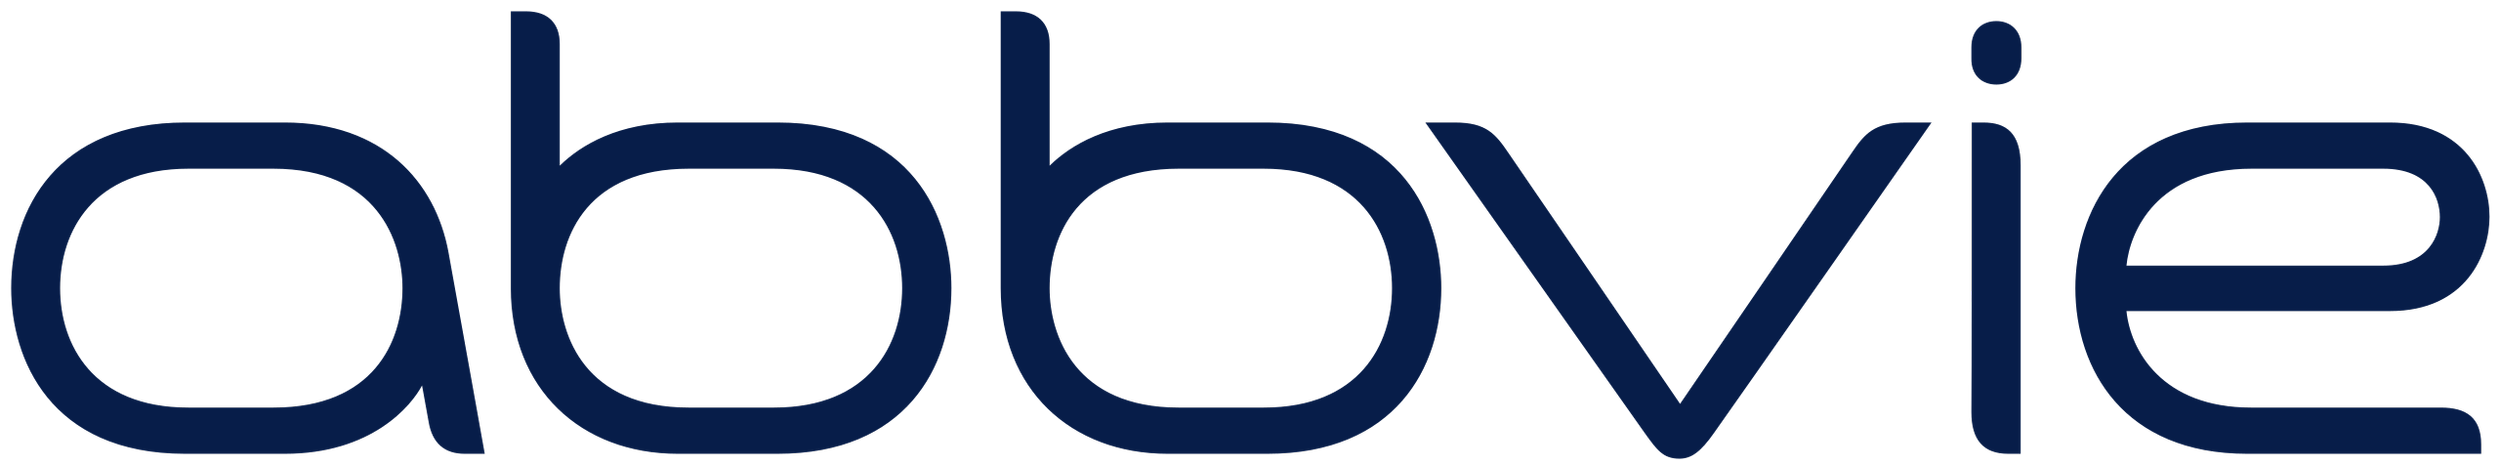 AbbVie_logo.svg (1).png